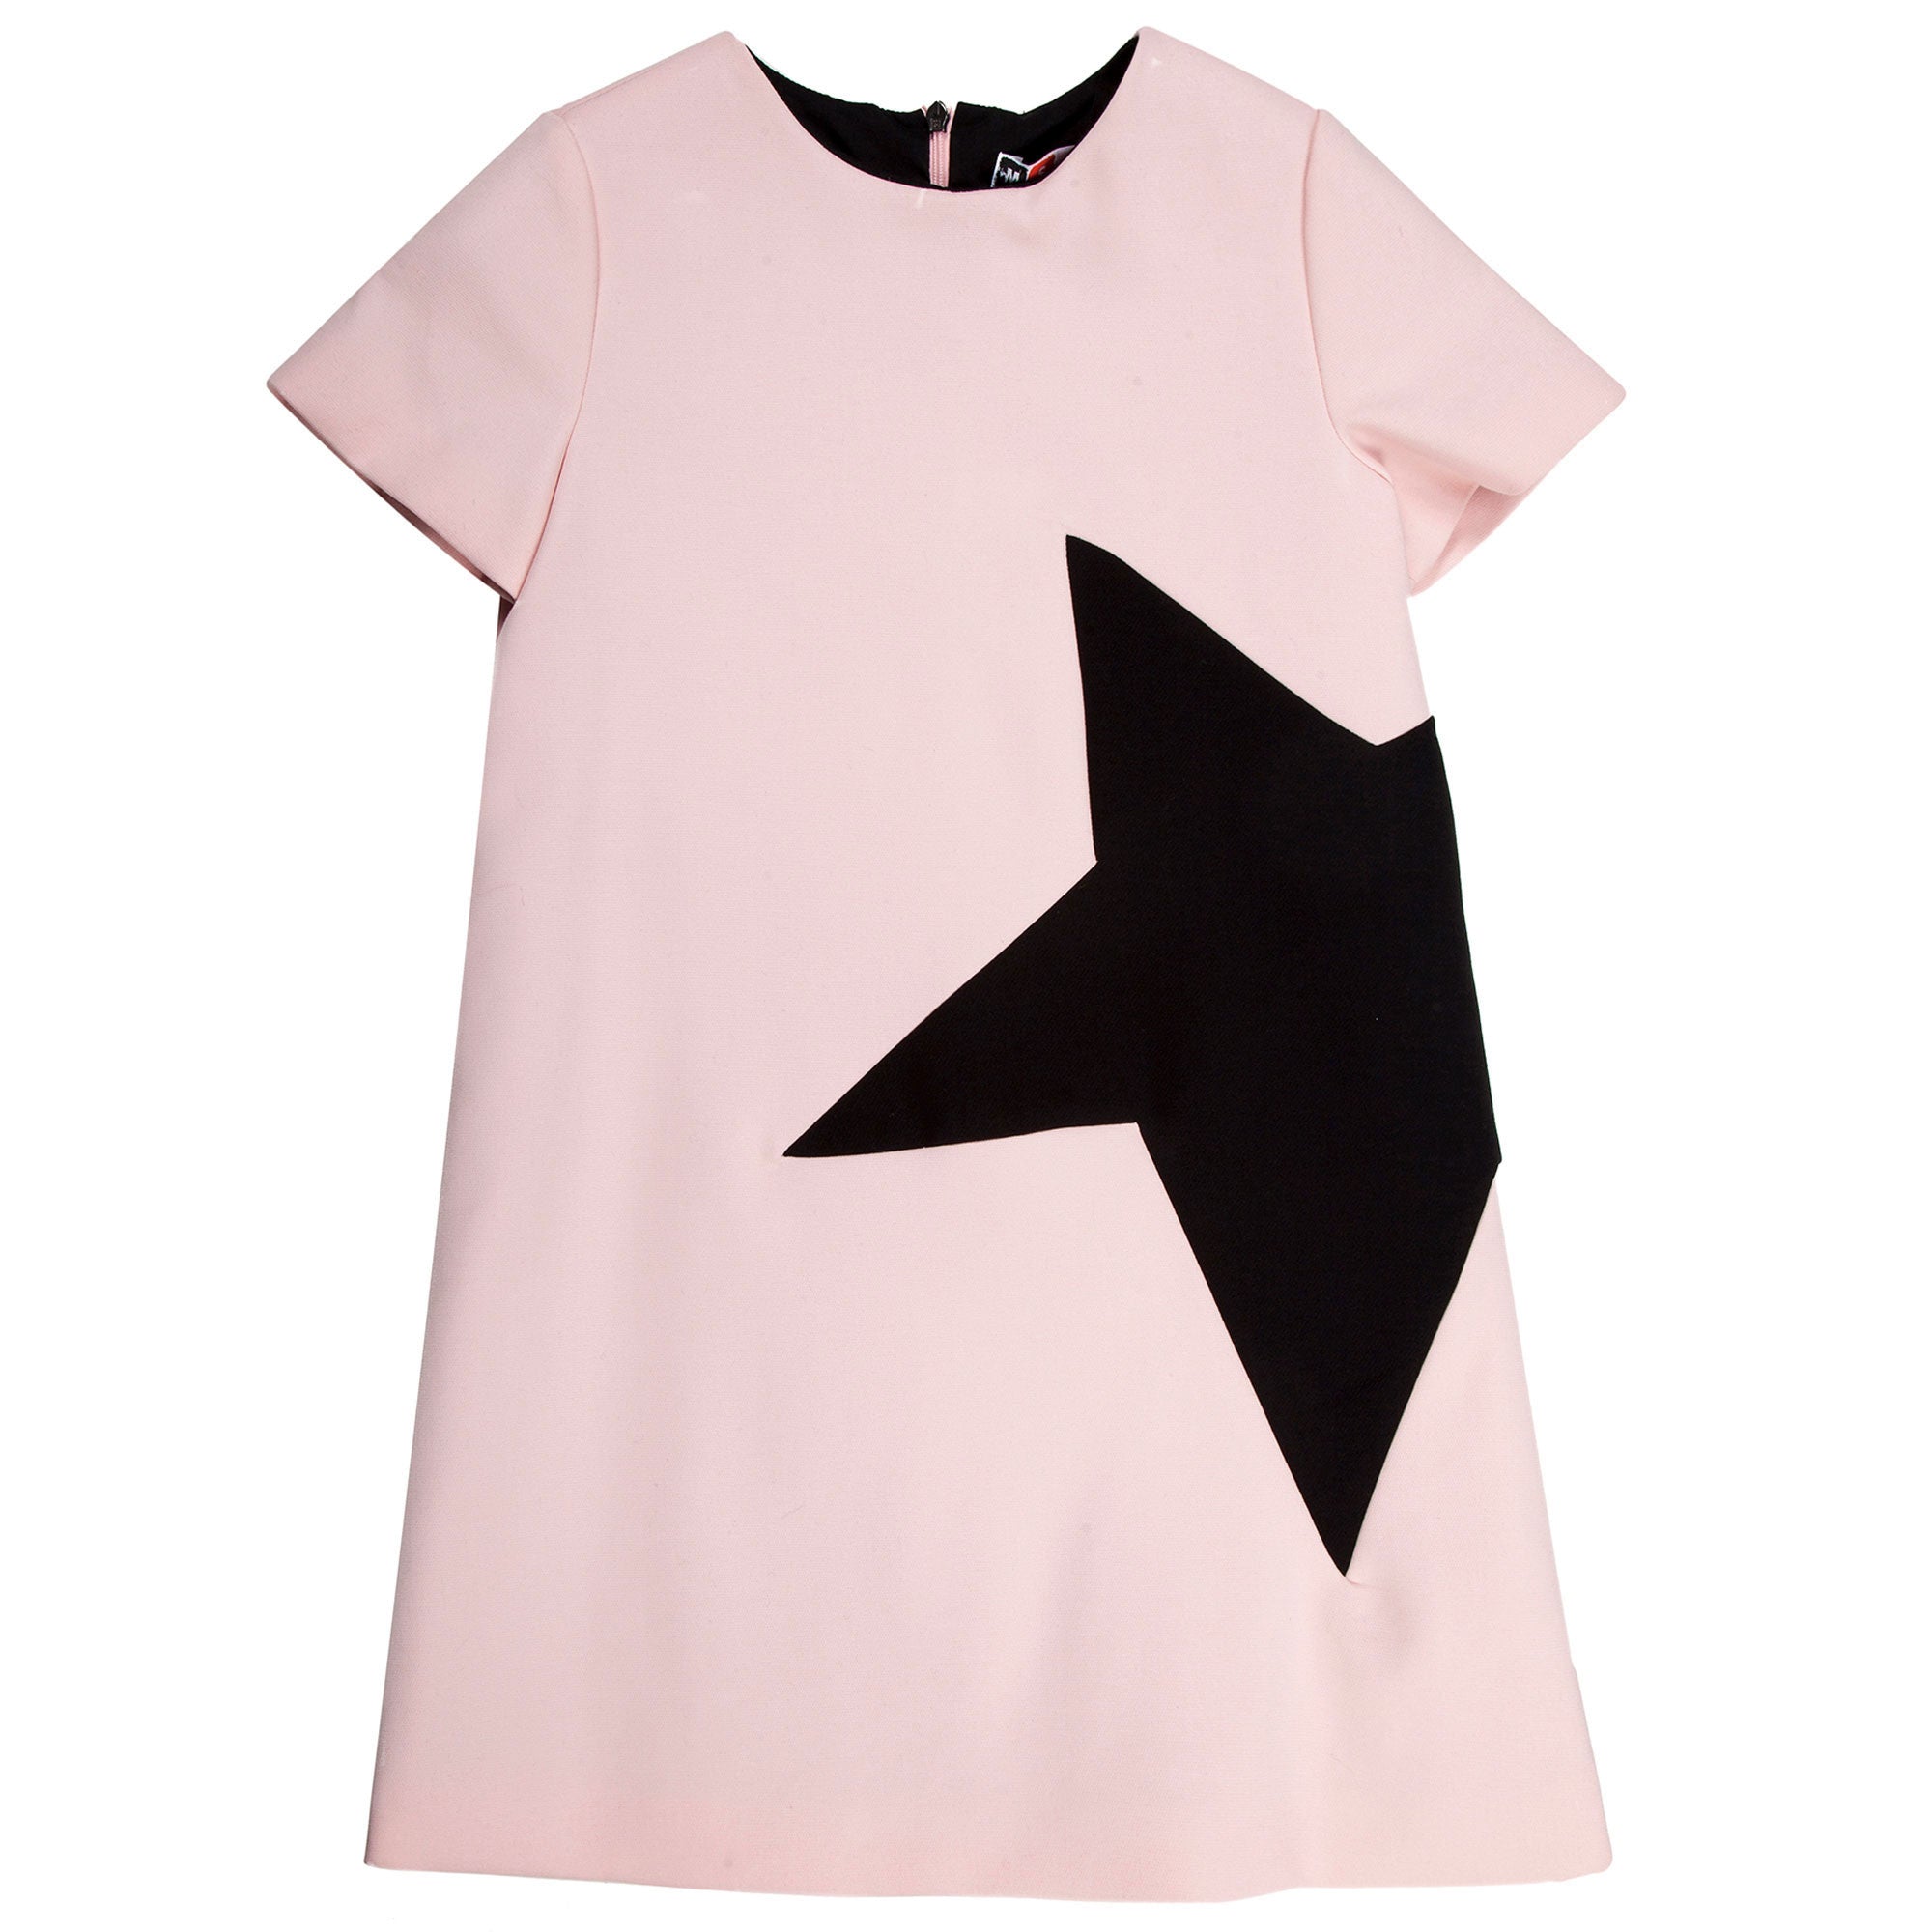 Girls Pink Cotton Dress With Black Star Trims - CÉMAROSE | Children's Fashion Store - 1